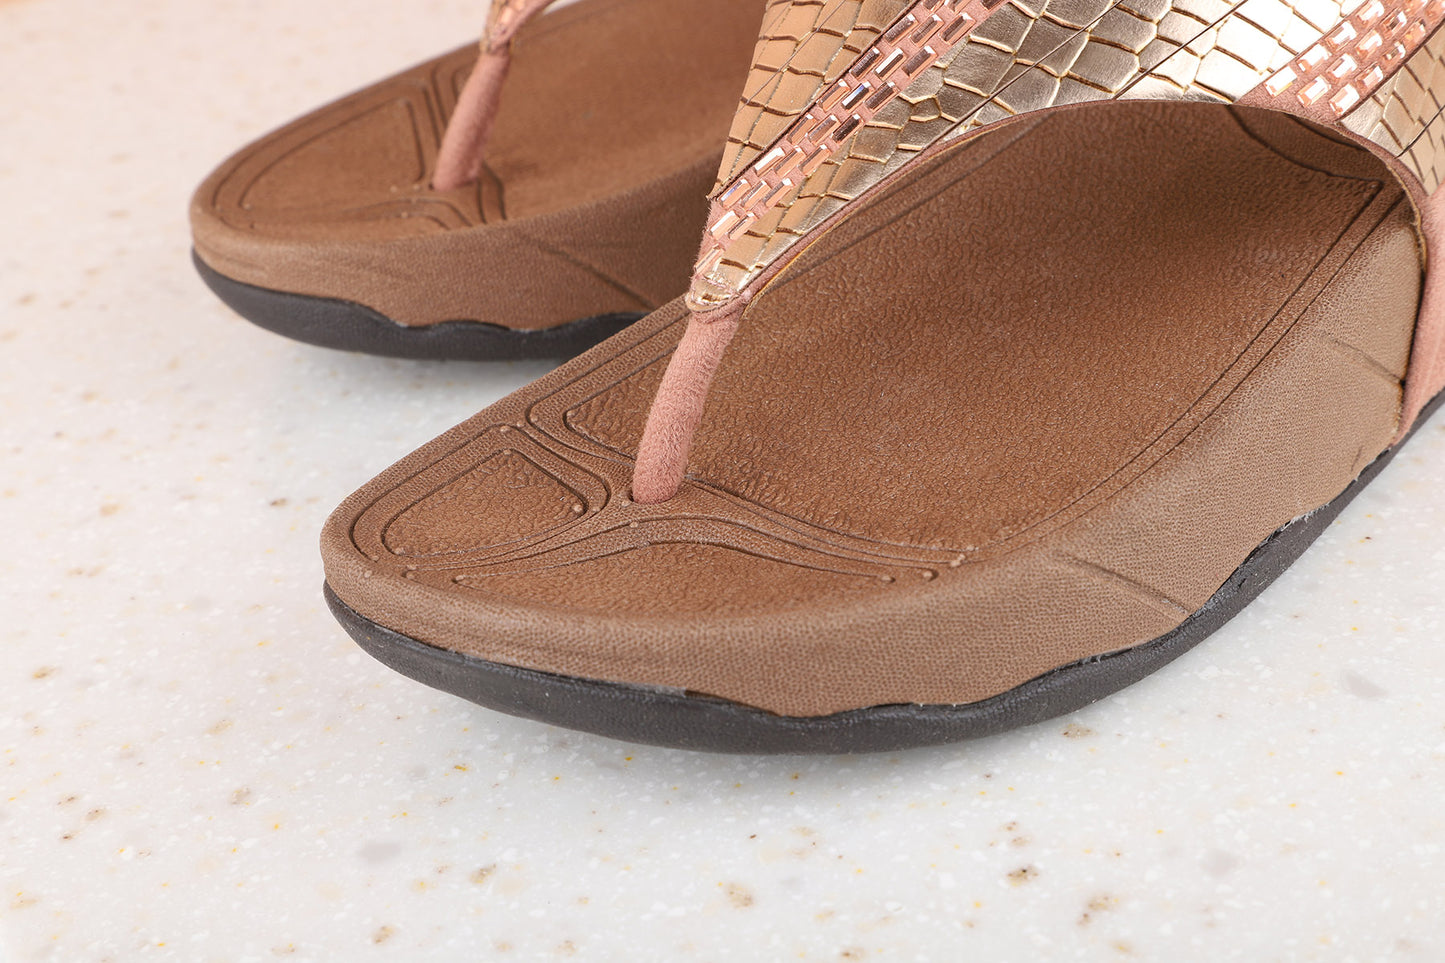 Women Peach Embellished Comfort Sandals